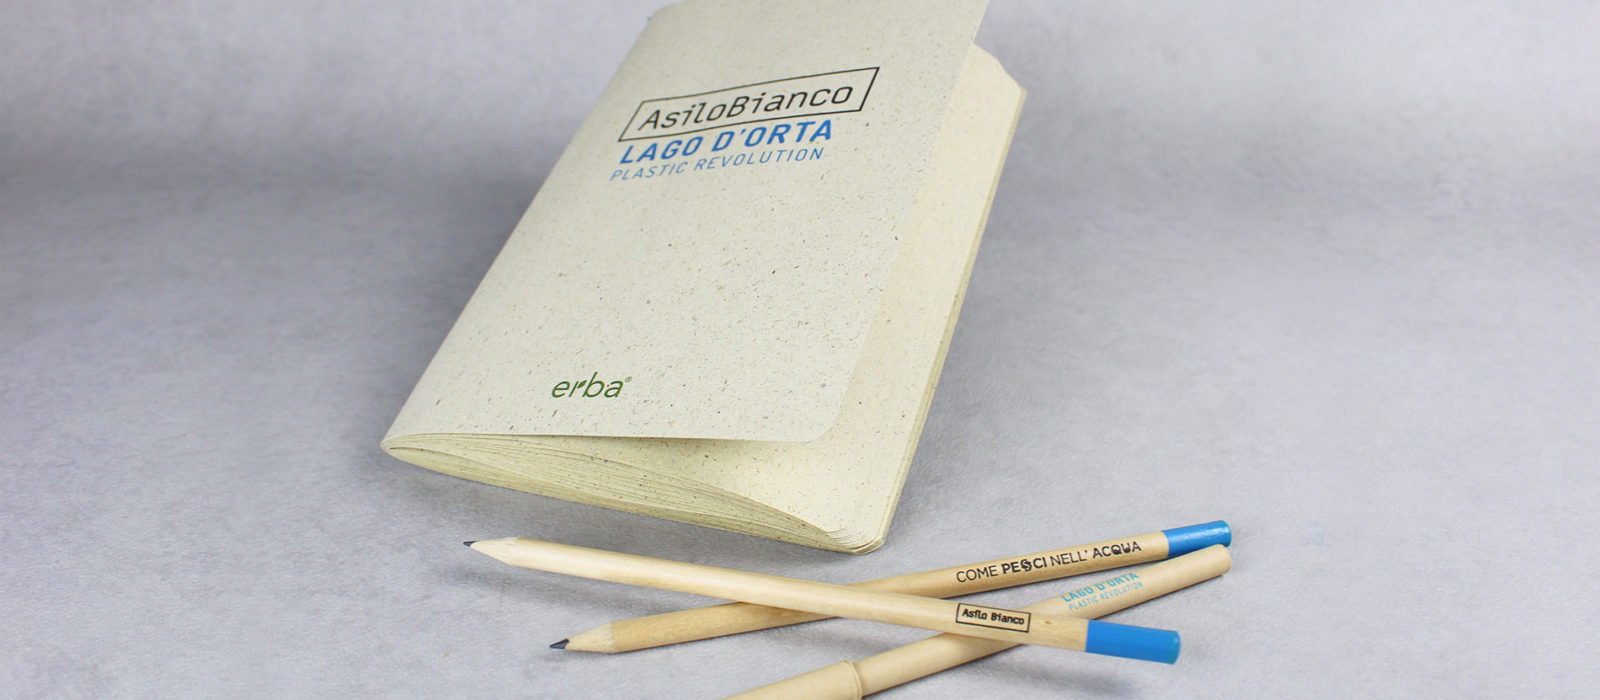 Case study: quaderno carta erba e penna carta ecologica